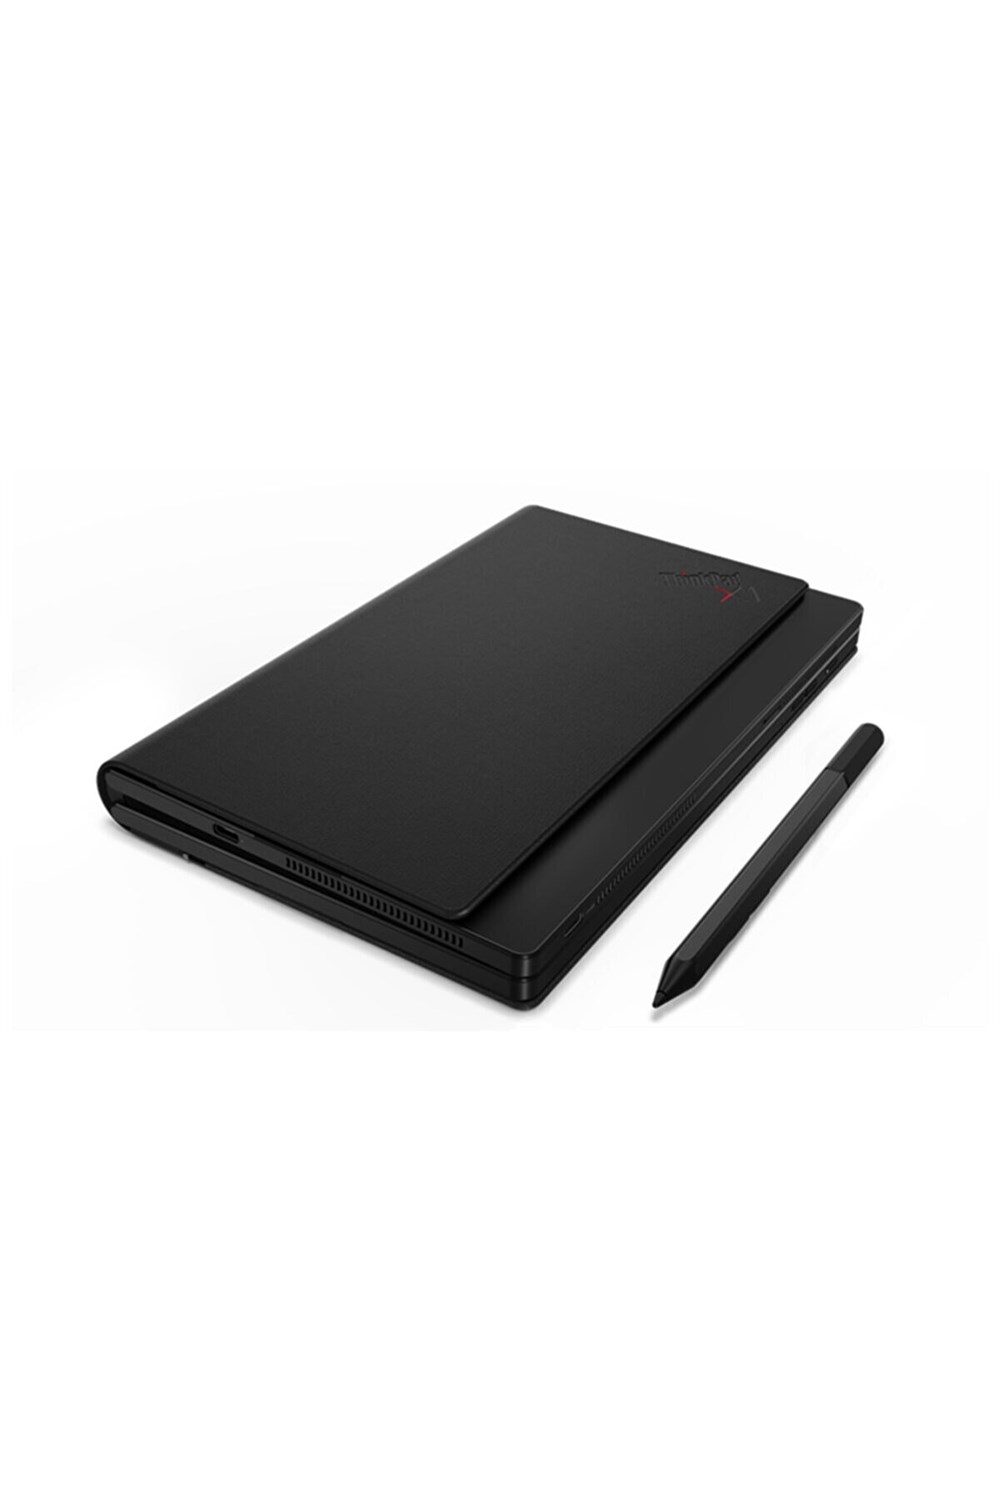 LENOVO Thinkpad X1 Fold G1 I5 8gb 1tb Katlanan Ekranlı Hem Laptop Hem Tablet  Win 10 Pro 20RK000LUS